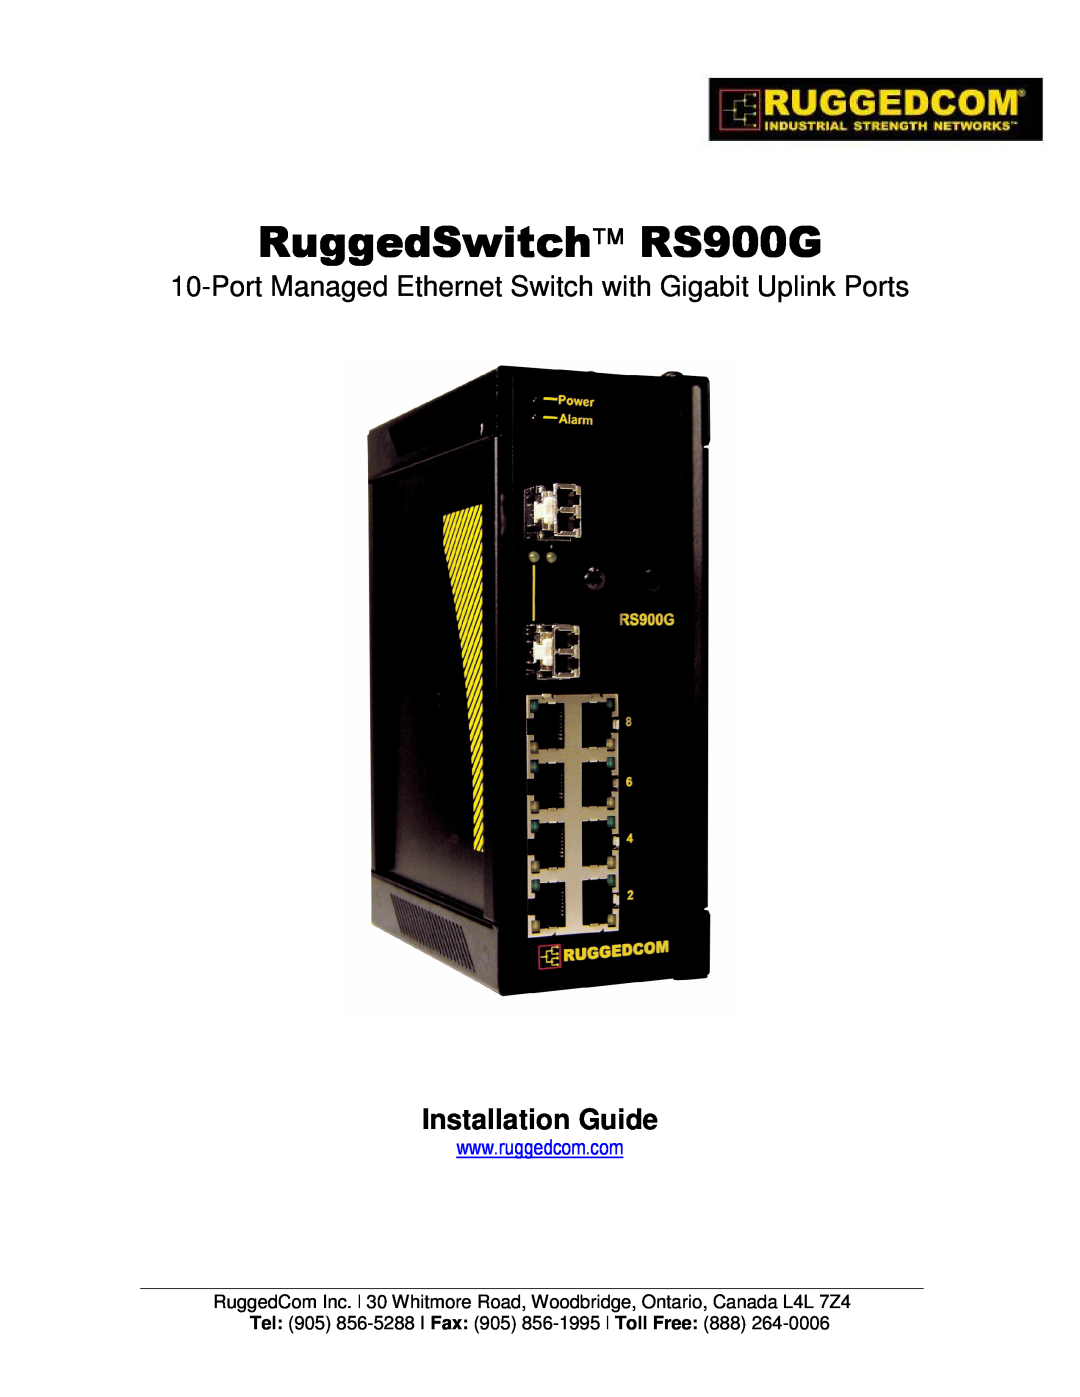 RuggedCom manual Installation Guide, RuggedSwitch RS900G, Port Managed Ethernet Switch with Gigabit Uplink Ports 